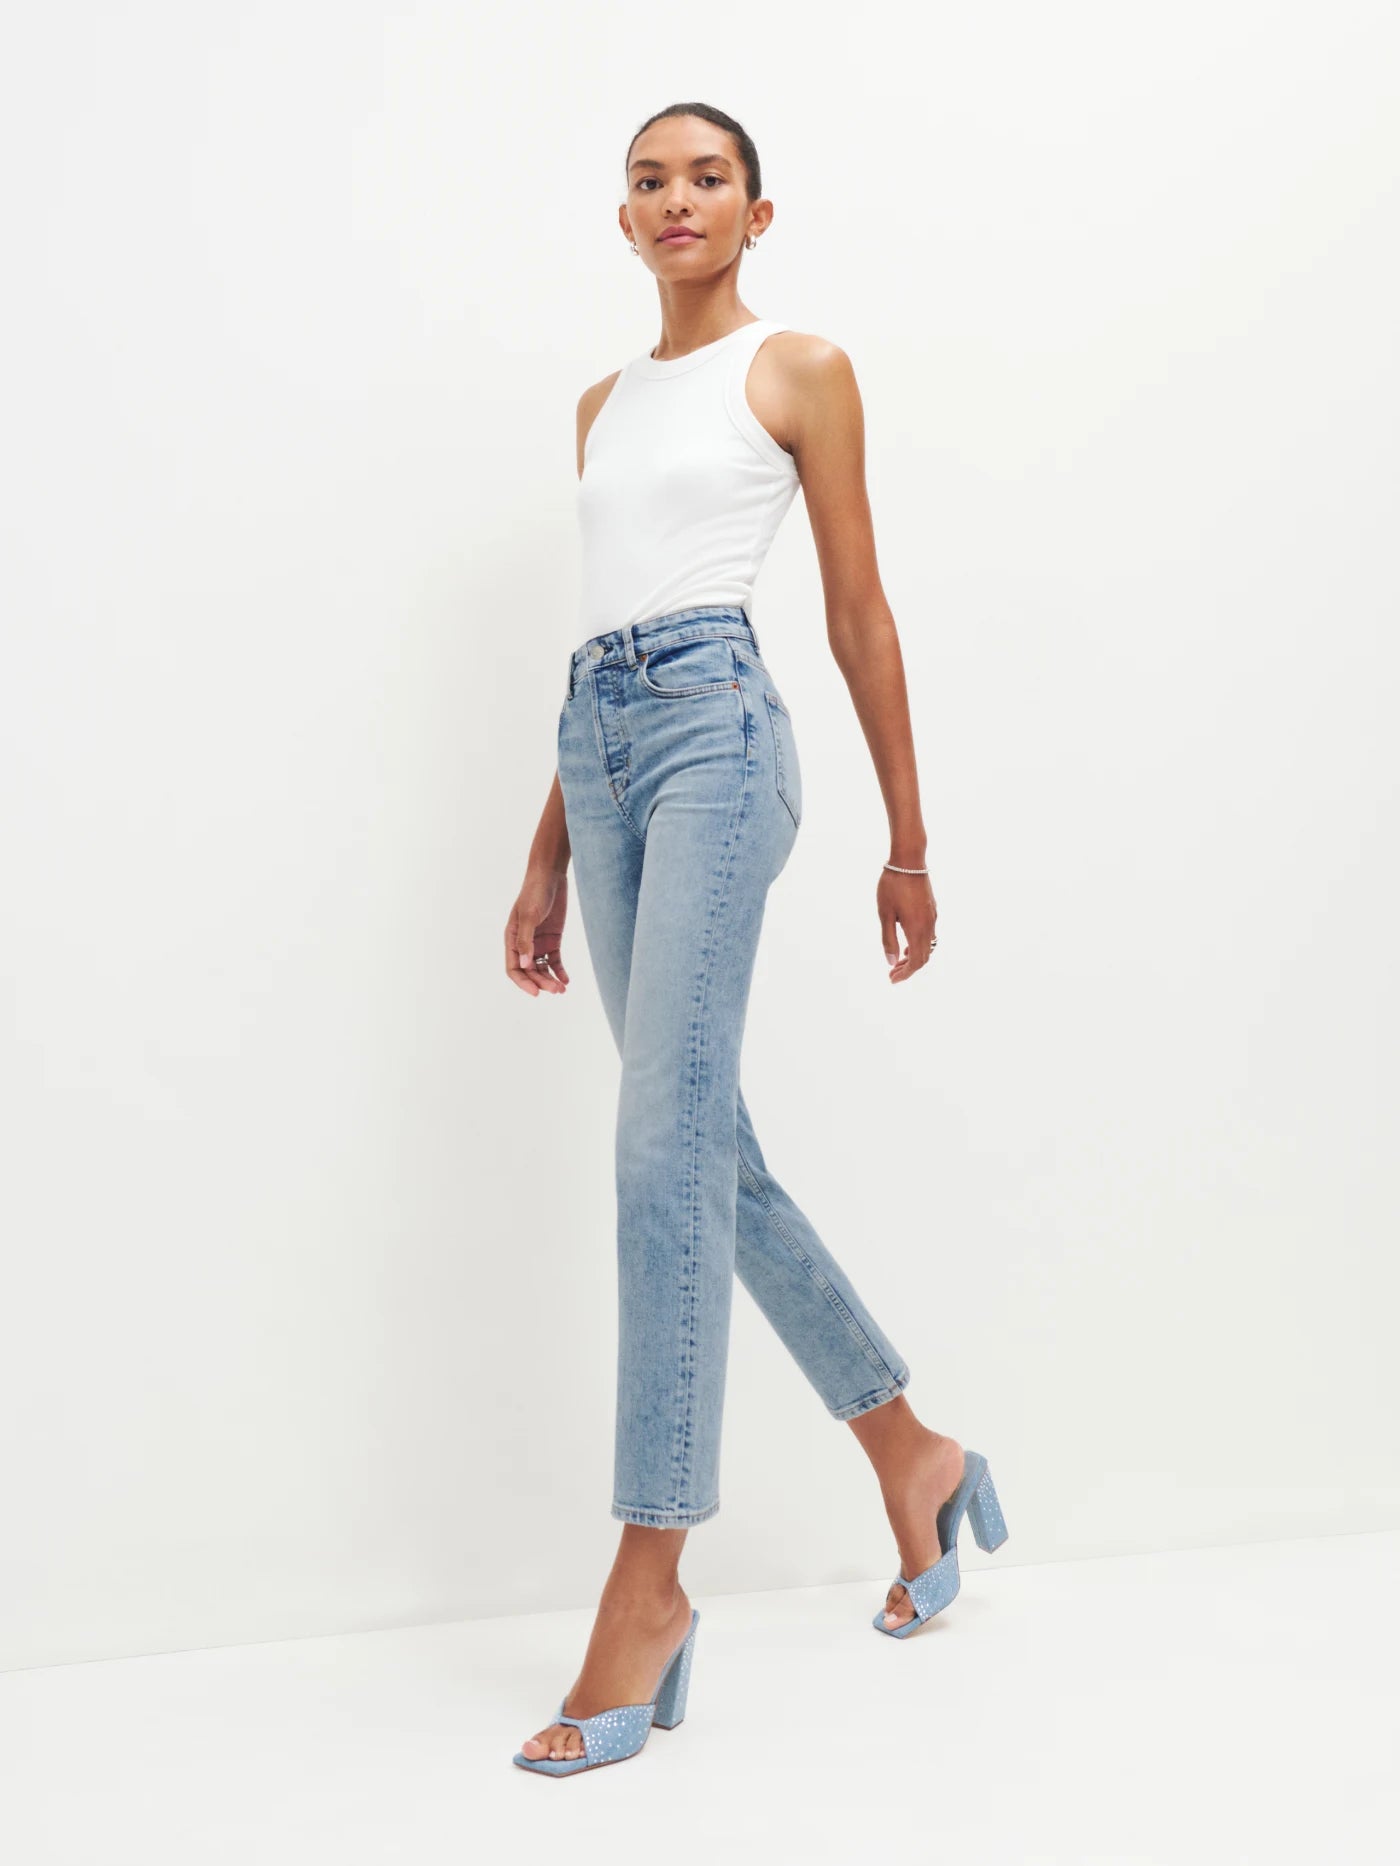 Arizona Jean Co Jeans Pants Blue Super Skinny Medium Wash Women's Size 5 -  Swedemom